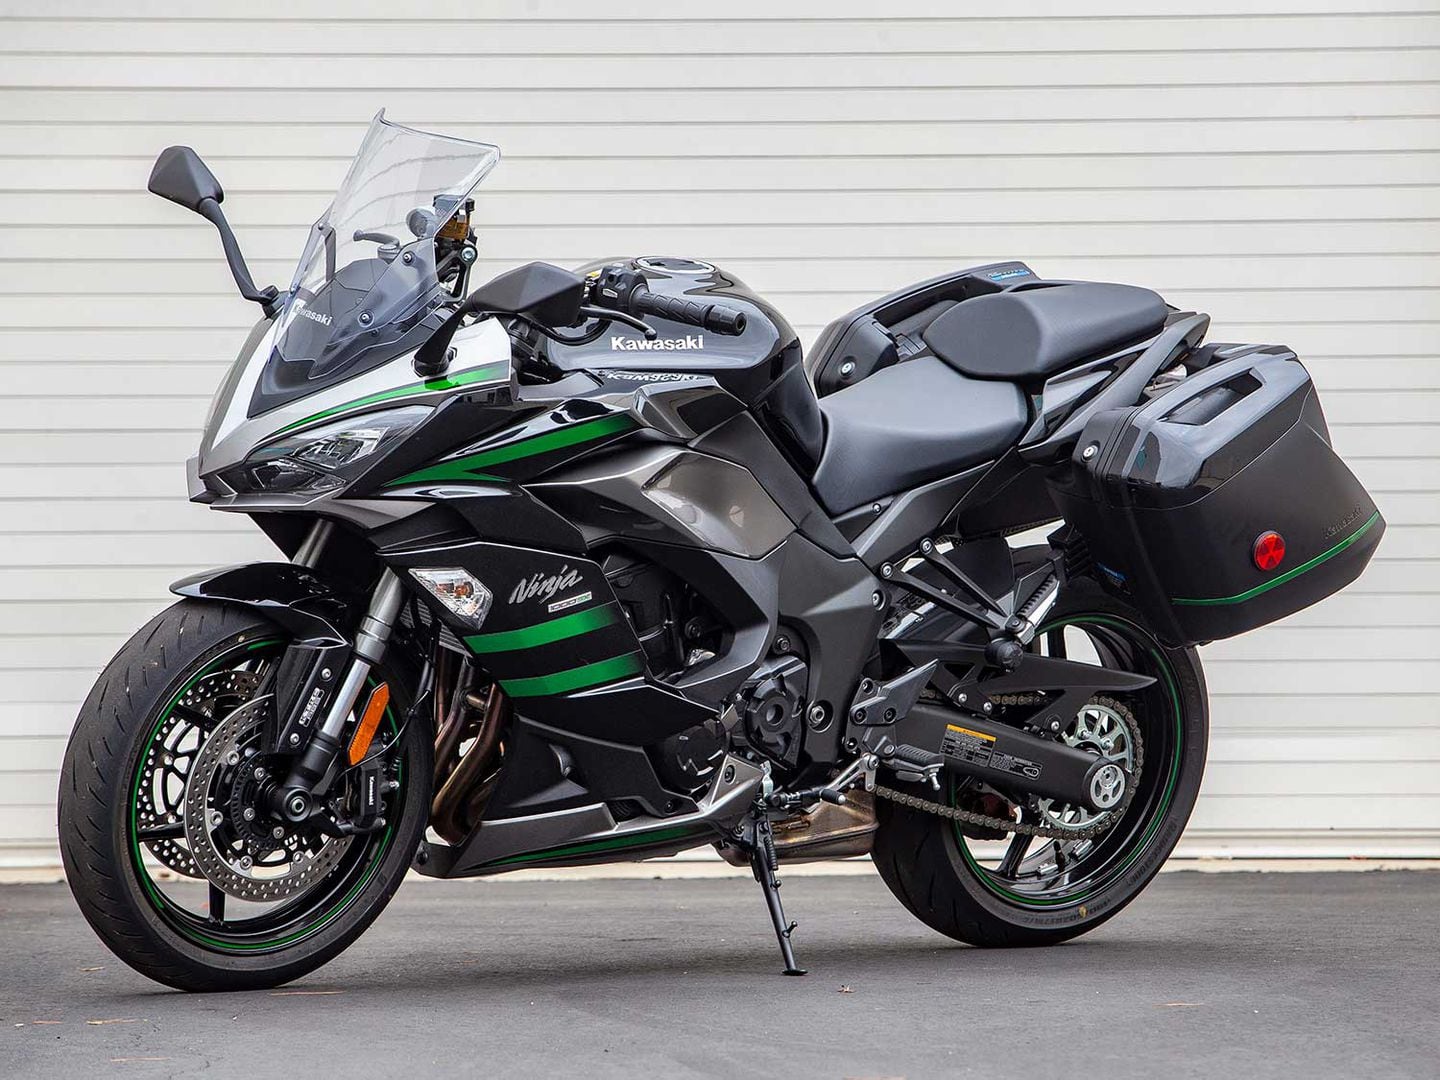 2020 Kawasaki Ninja 1000SX MC Commute Review Motorcyclist